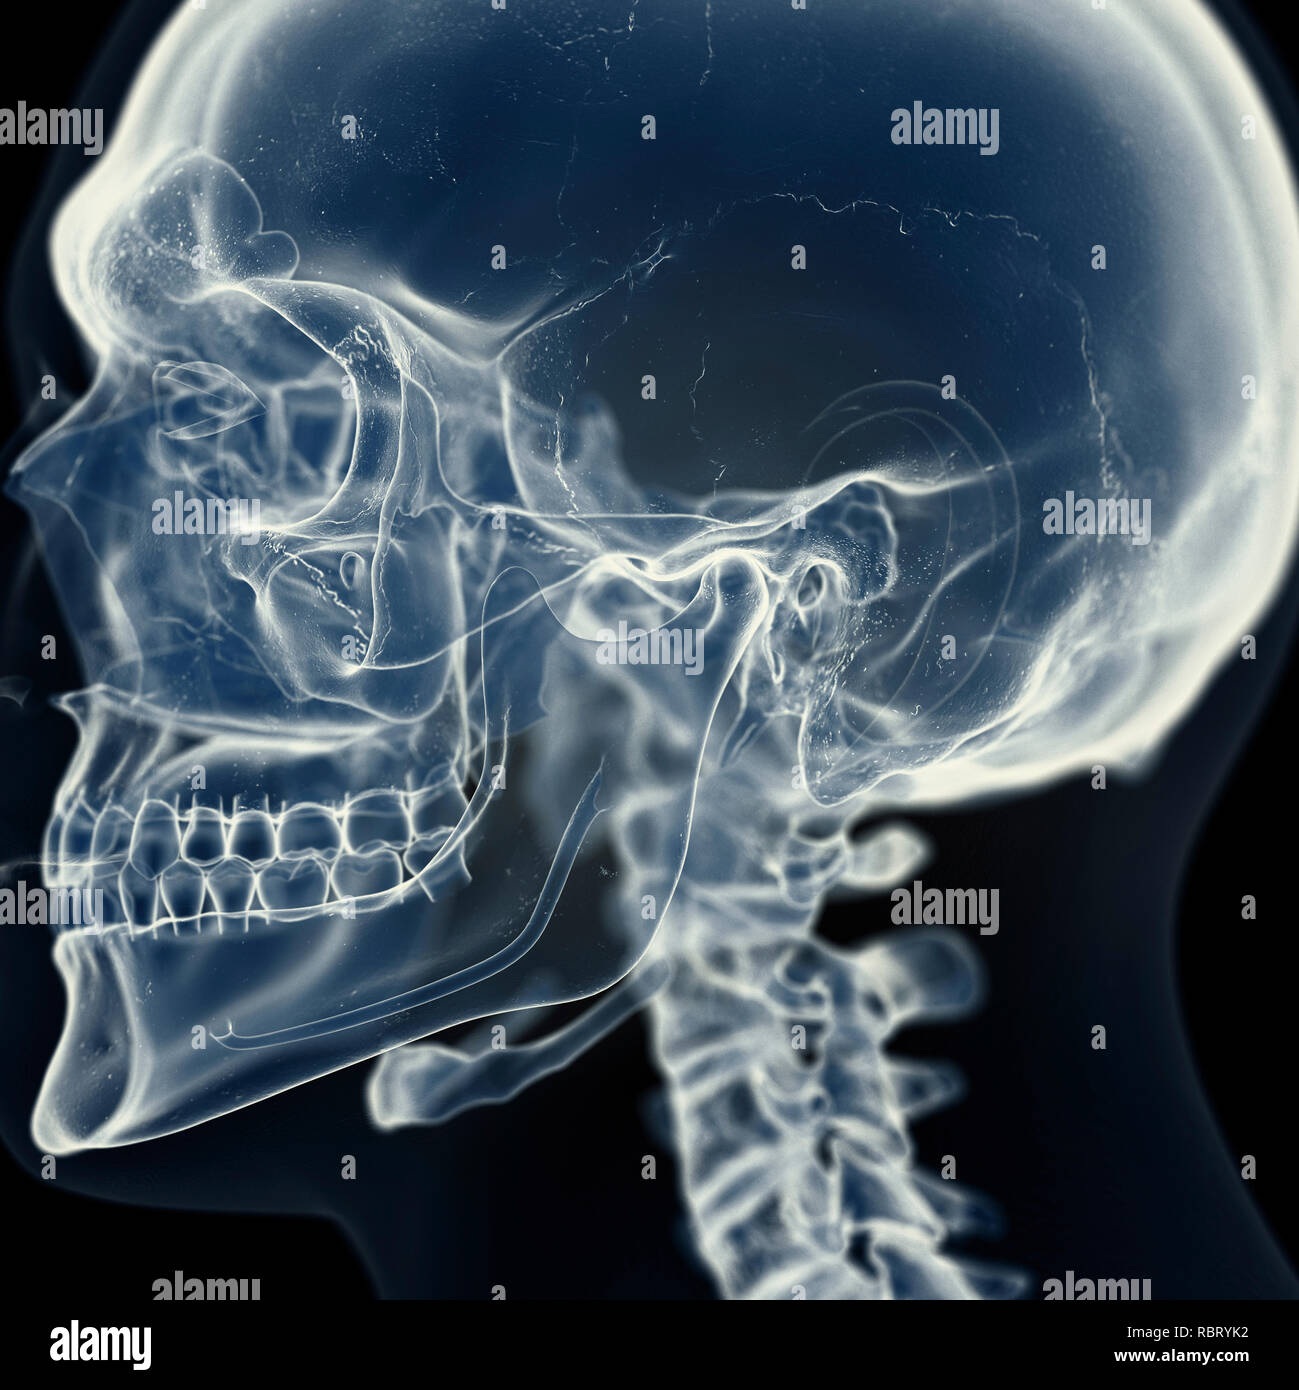 Illustration of the temporomandibular joint. Stock Photo